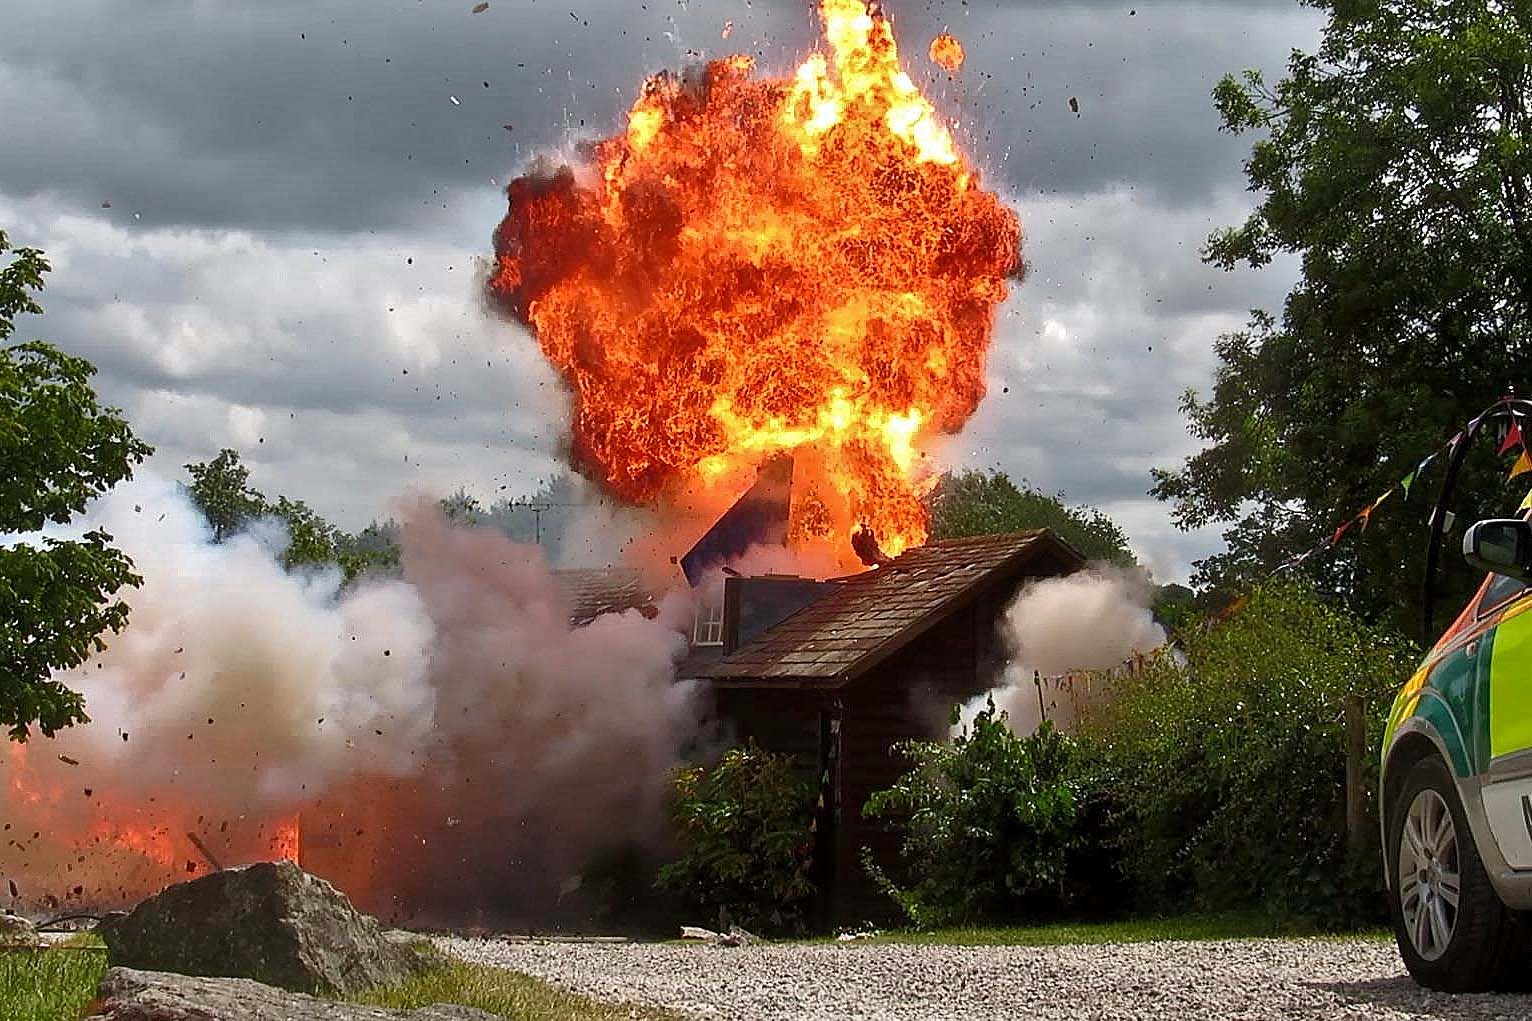 arcadiasfx emmerdale village hall explosion - TV special effects